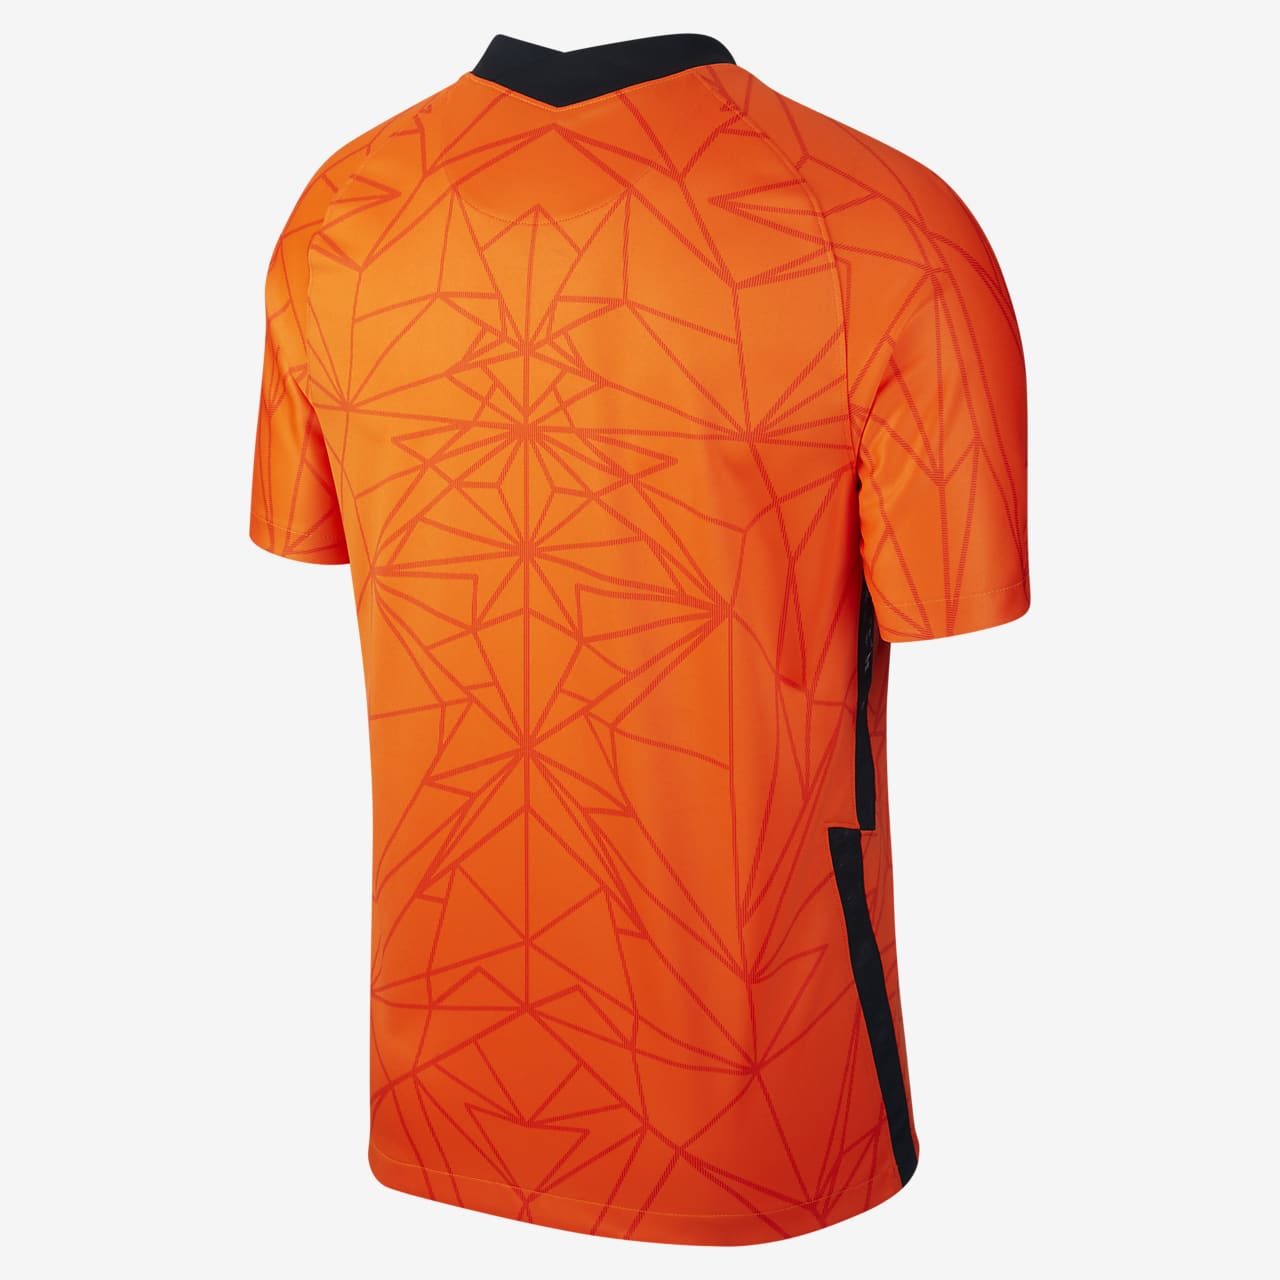 orange nike soccer jersey